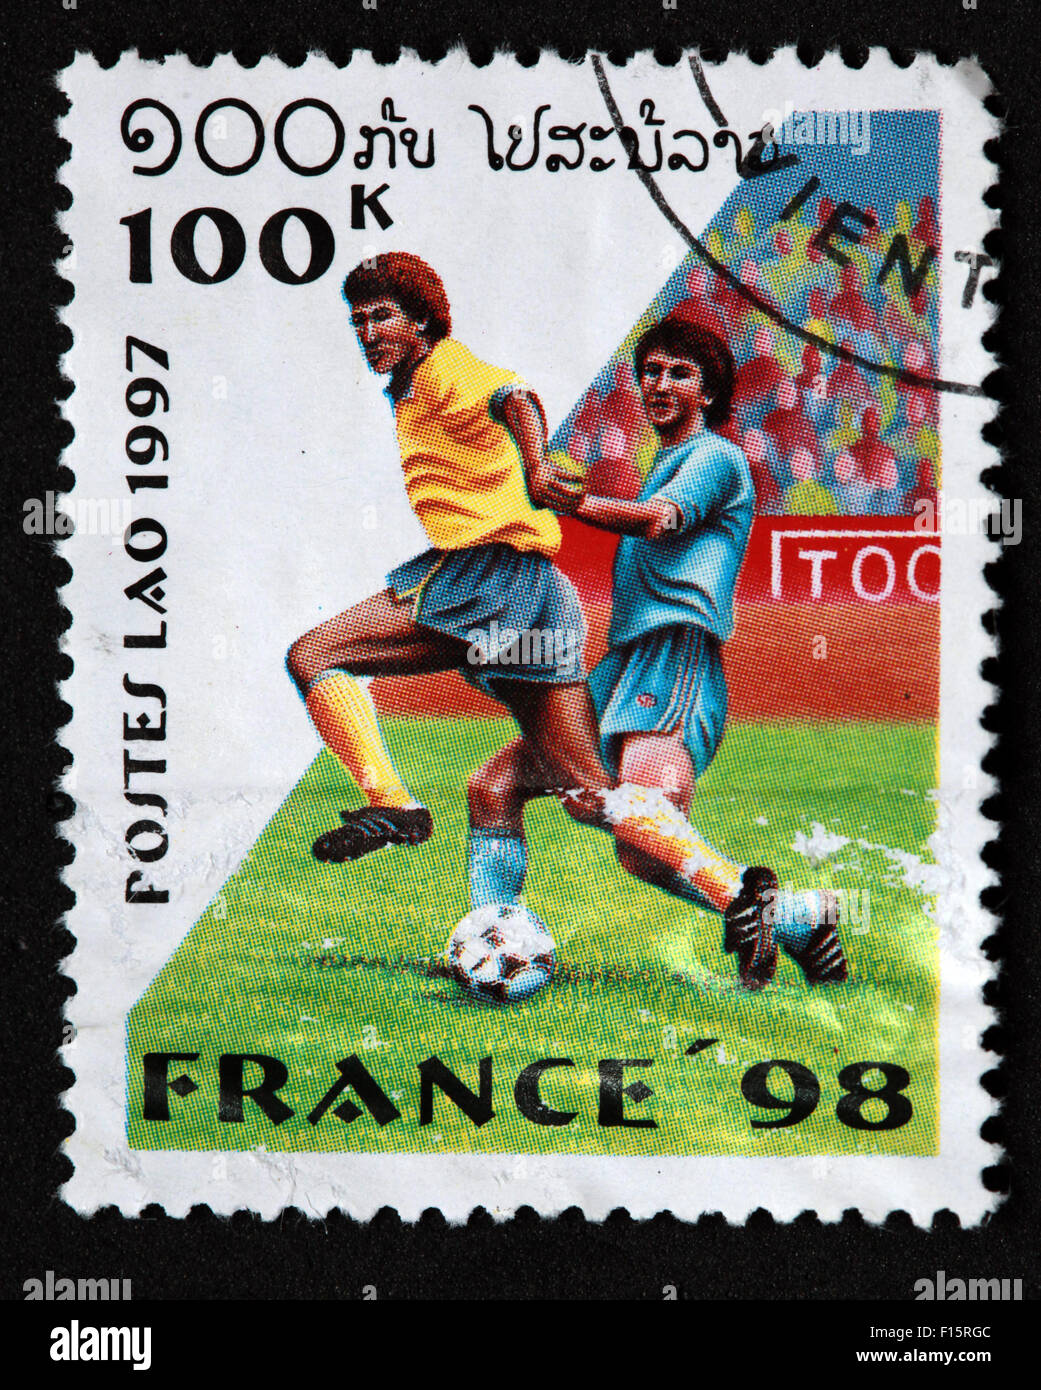 Laos Lao Postes 100K France 1998 98 Coupe du monde de football sports sport  worldcup stamp Photo Stock - Alamy